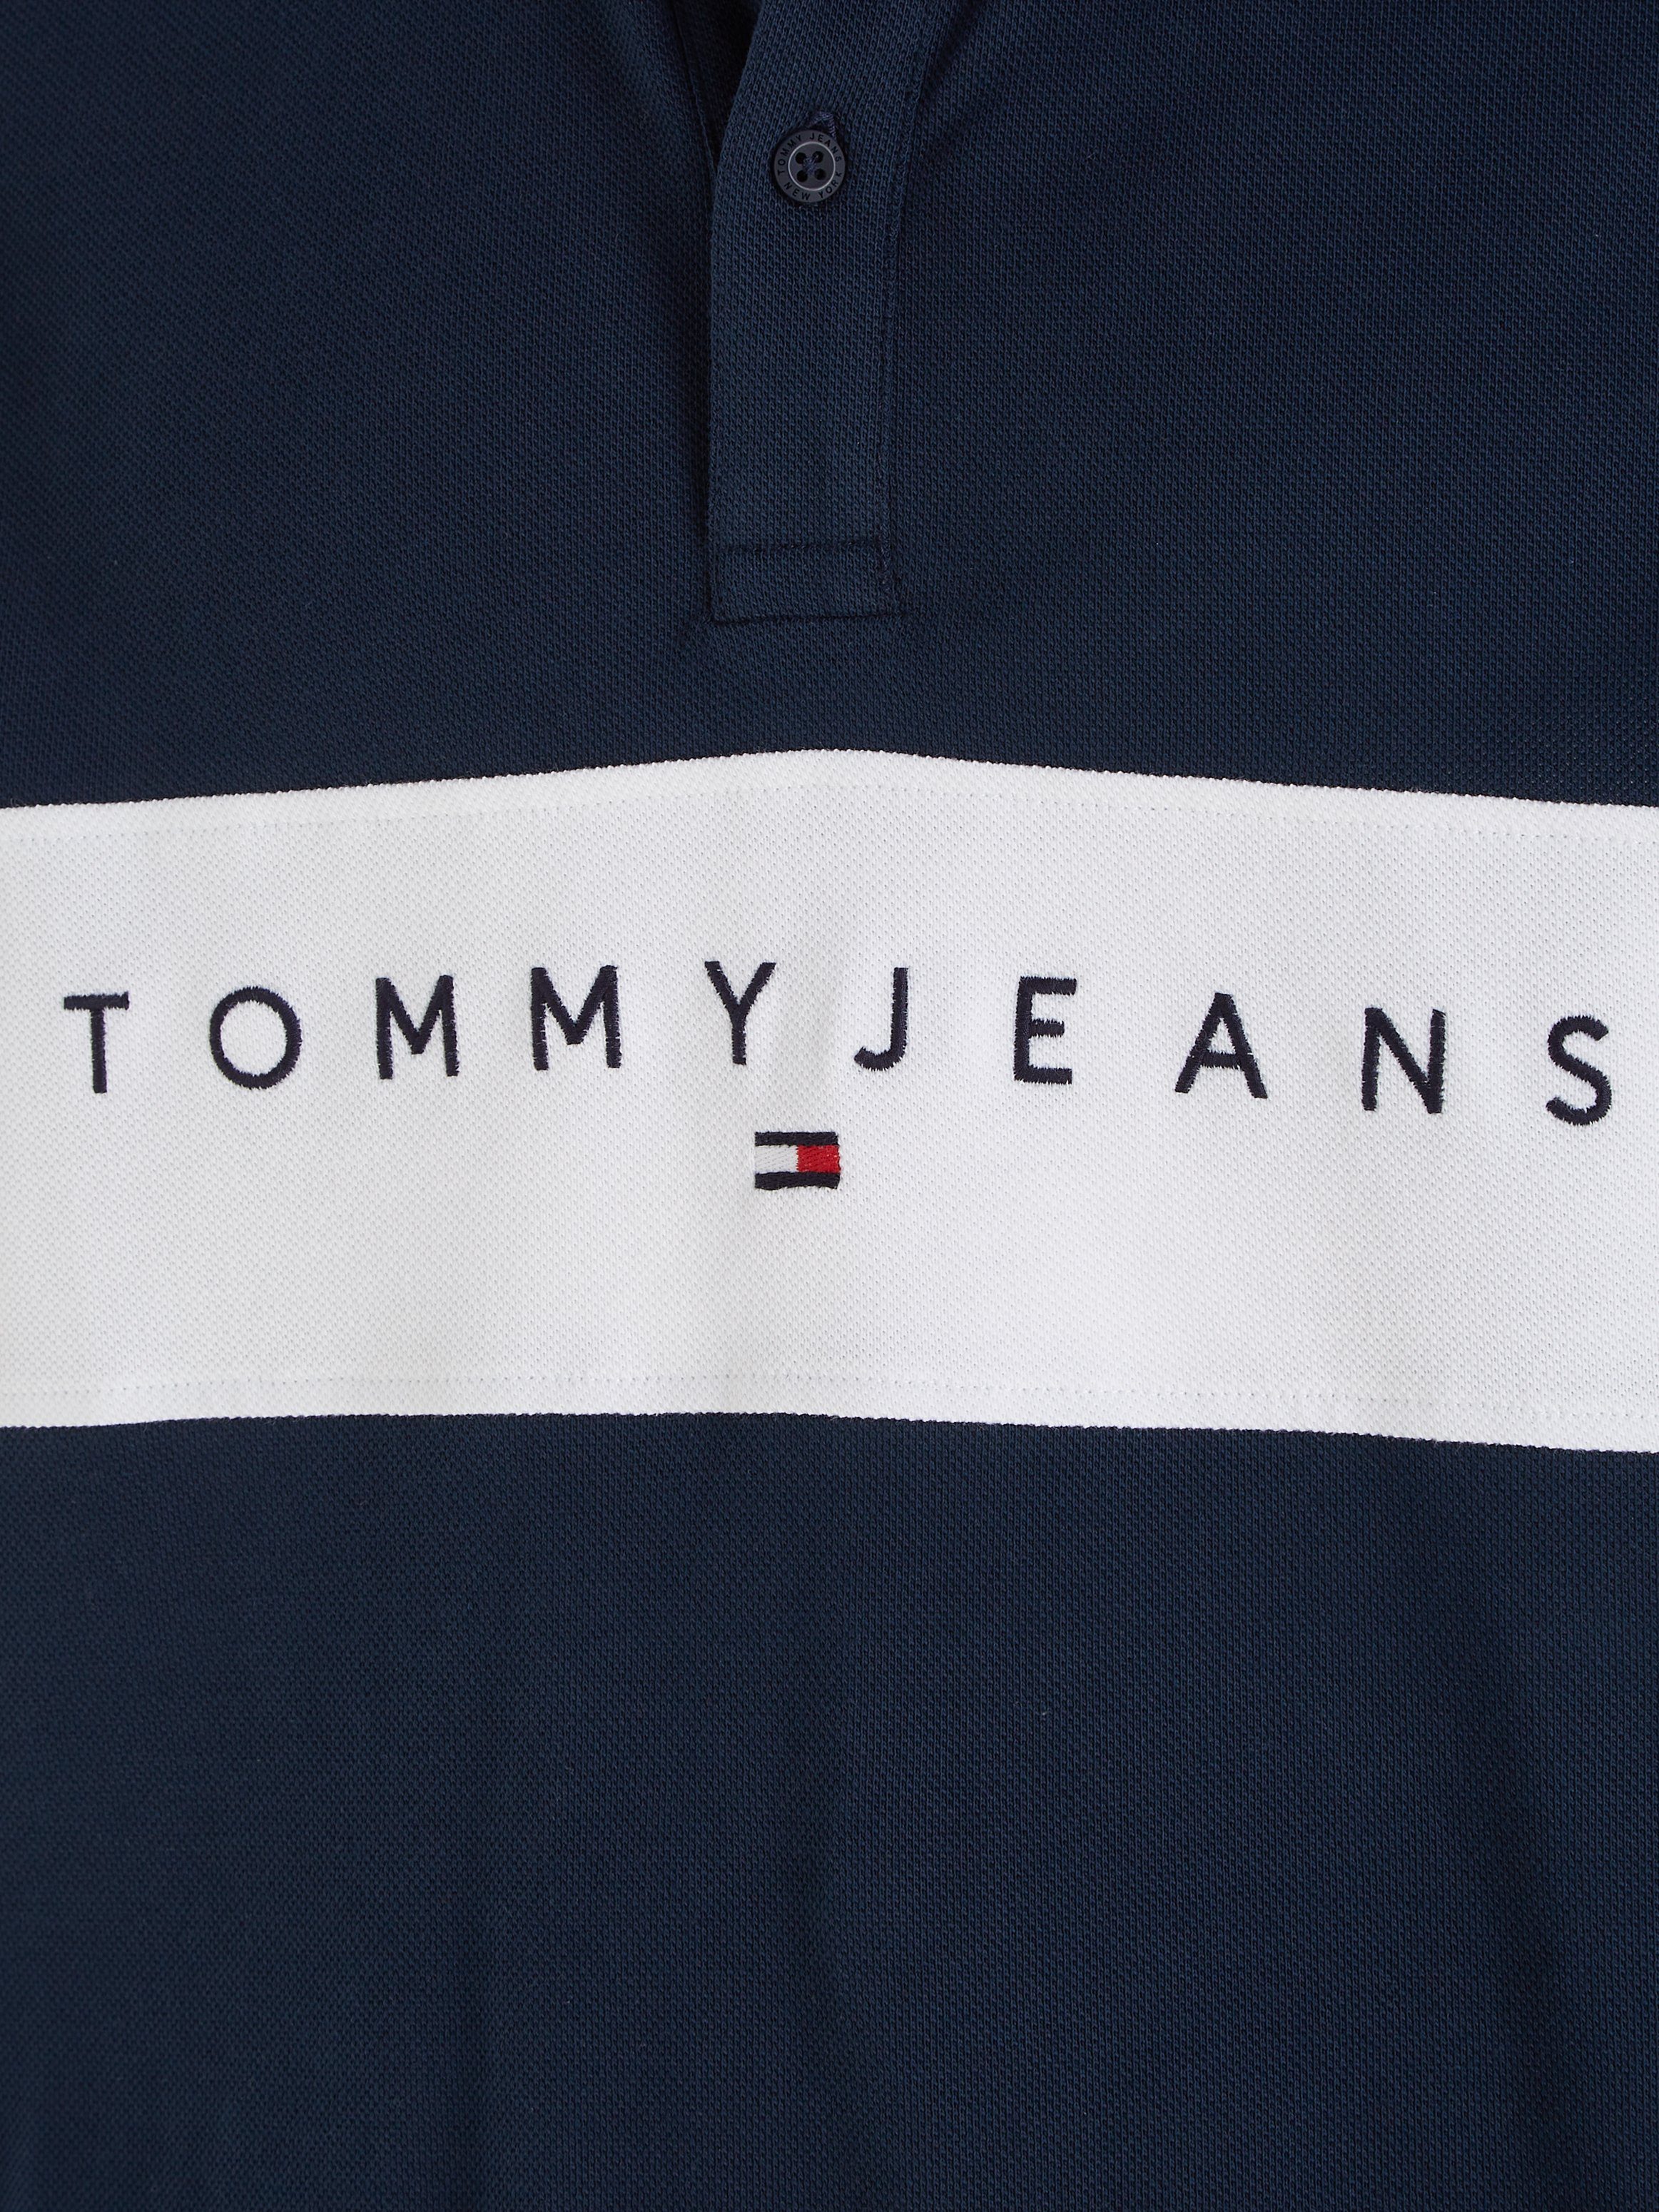 Tommy Jeans Poloshirt TJM REG Jeans mit Schriftzug LINEAR Tommy großem POLO